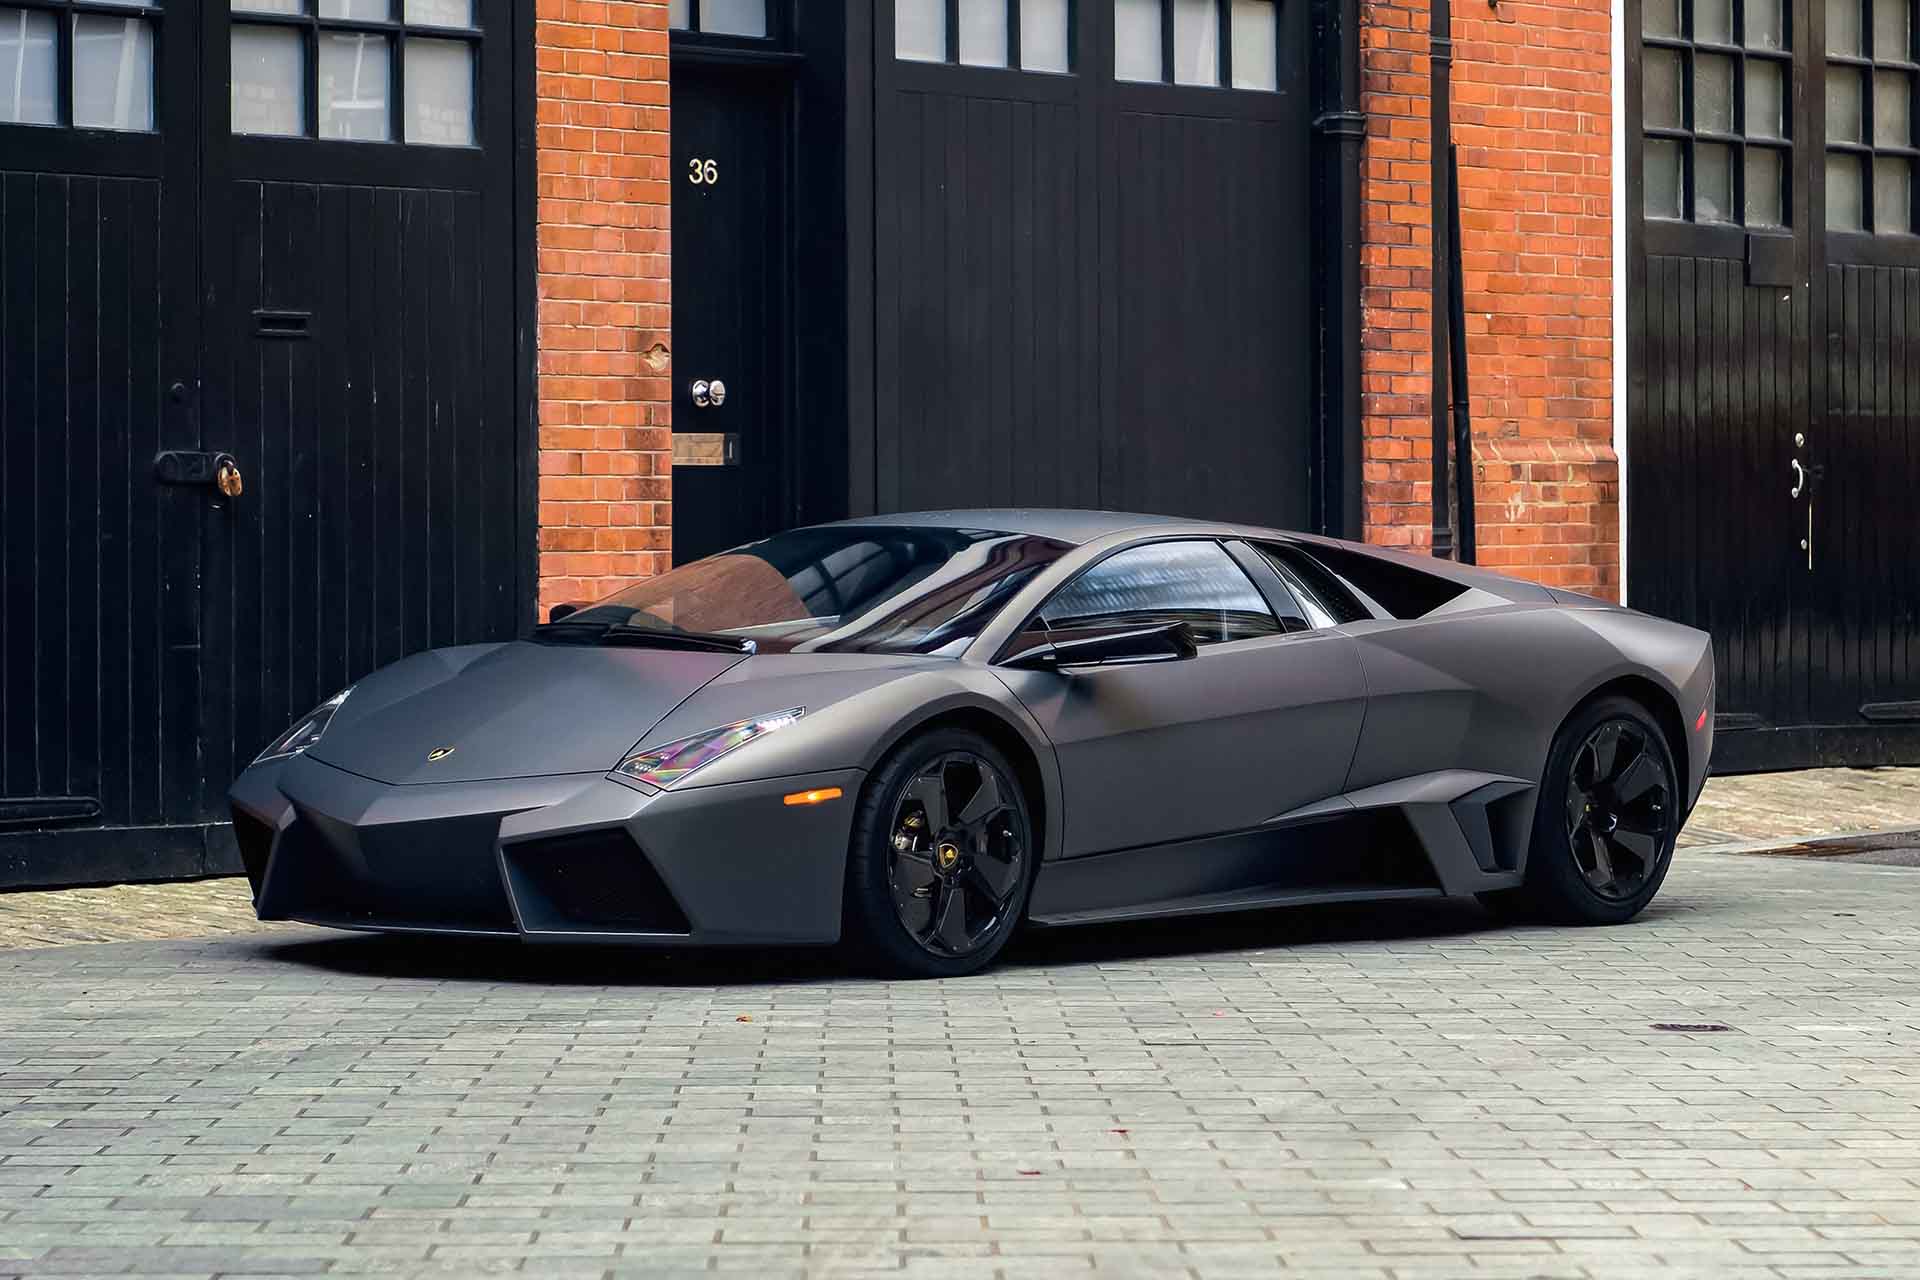 Grey Lamborghini Reventon parked outside a brick industrial building in London, UK.